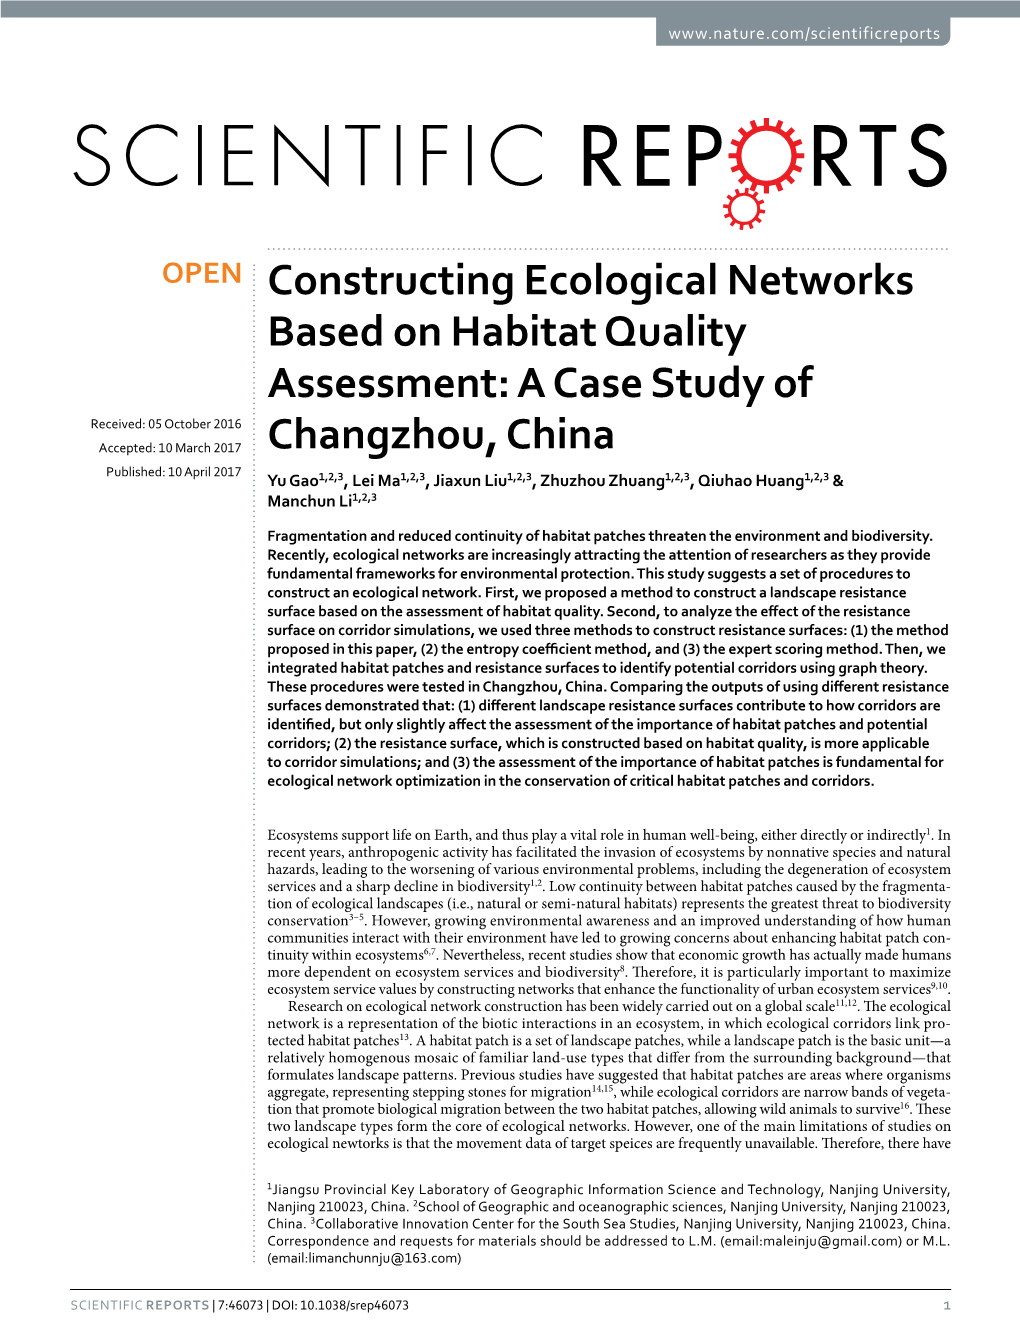 Constructing Ecological Networks Based on Habitat Quality Assessment